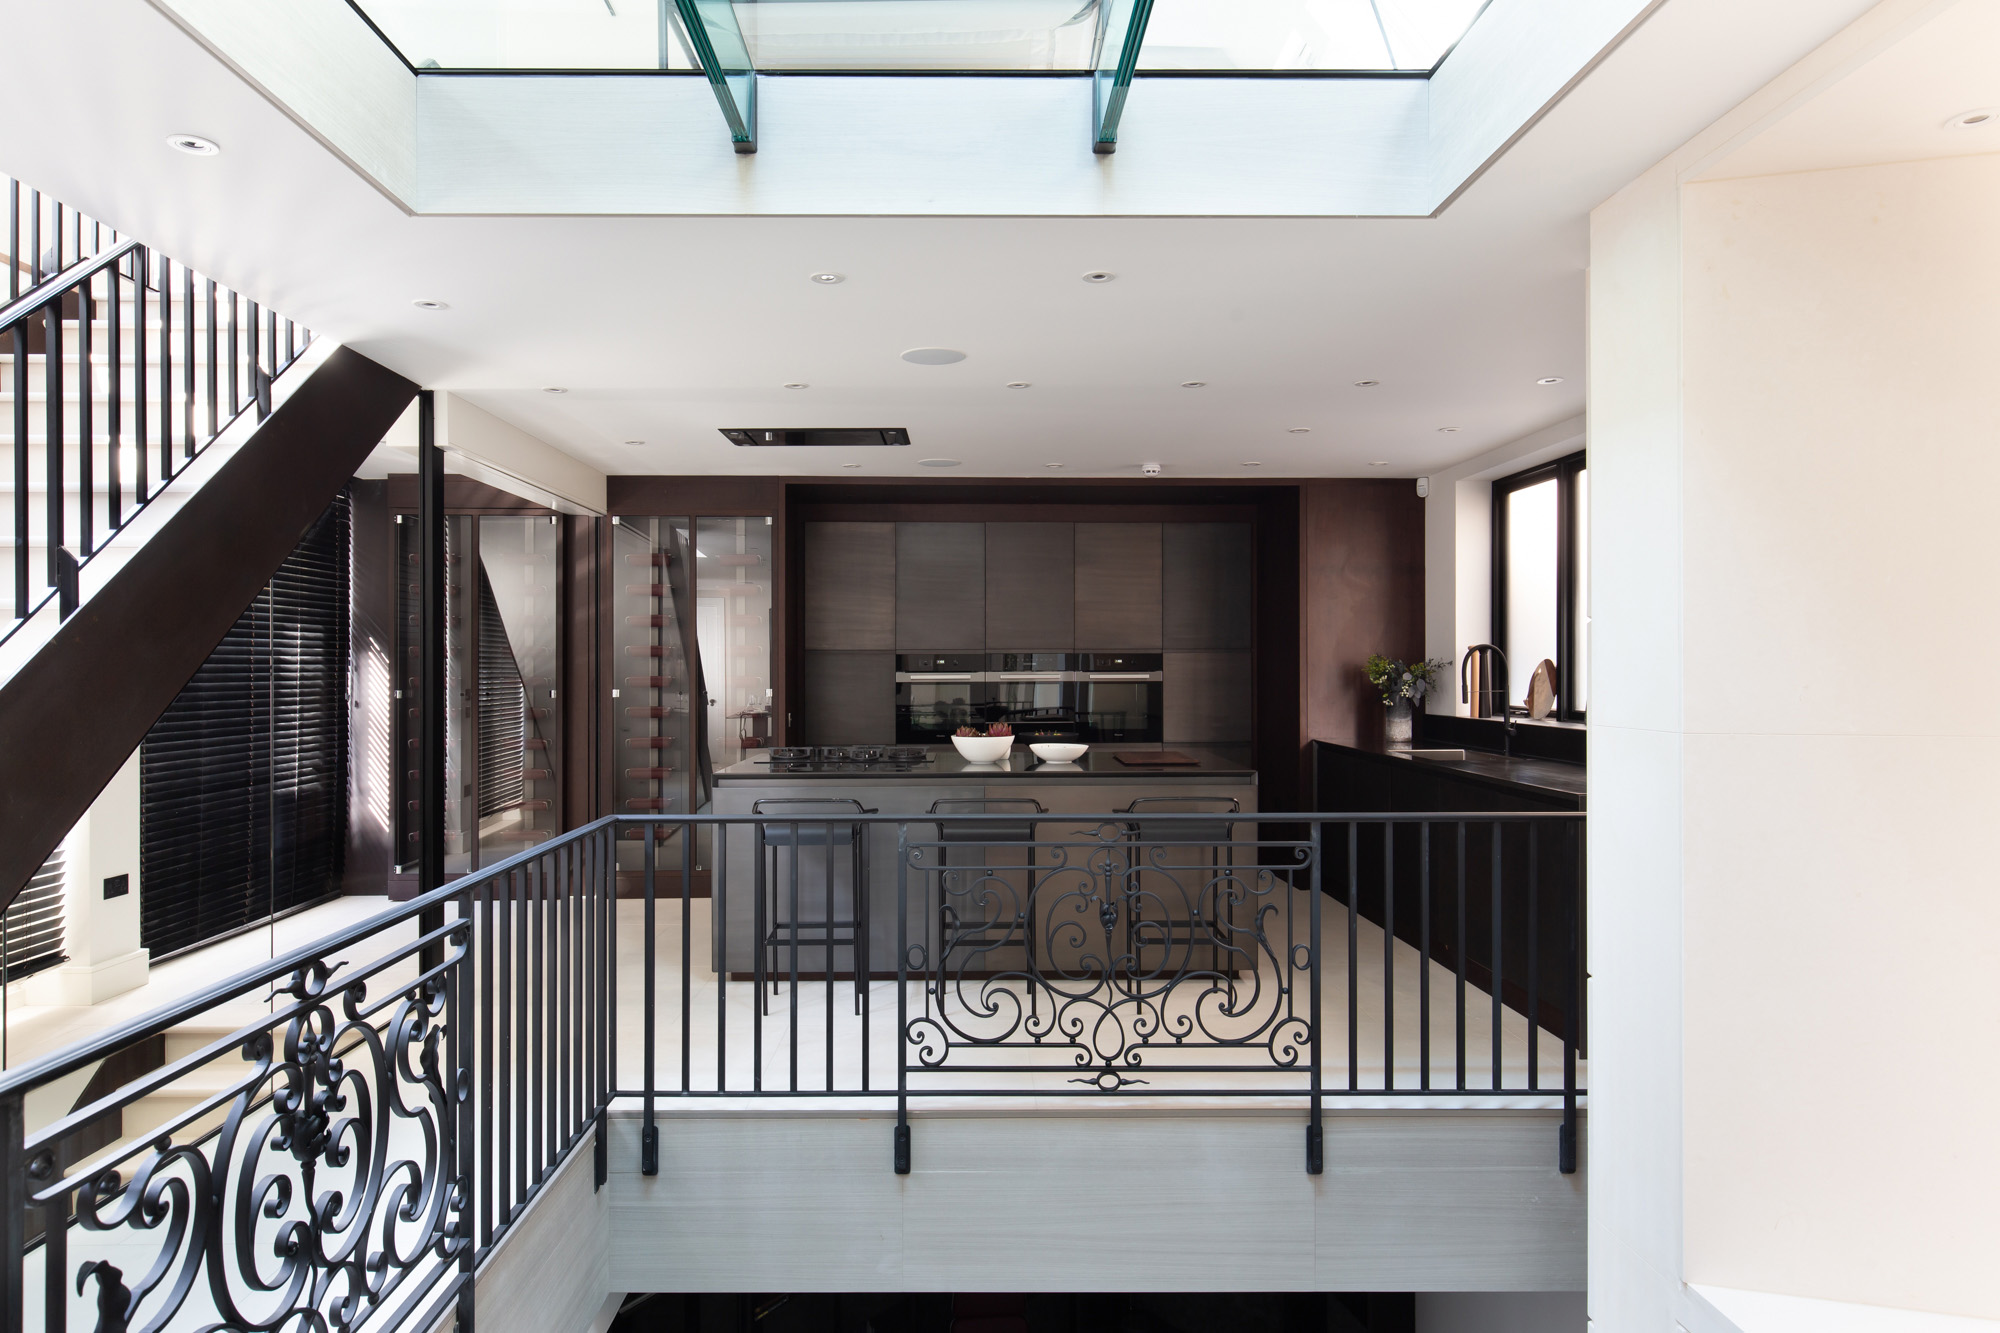 For Sale: Powis Mews Notting Hill W11 dramatic mezzanine kitchen